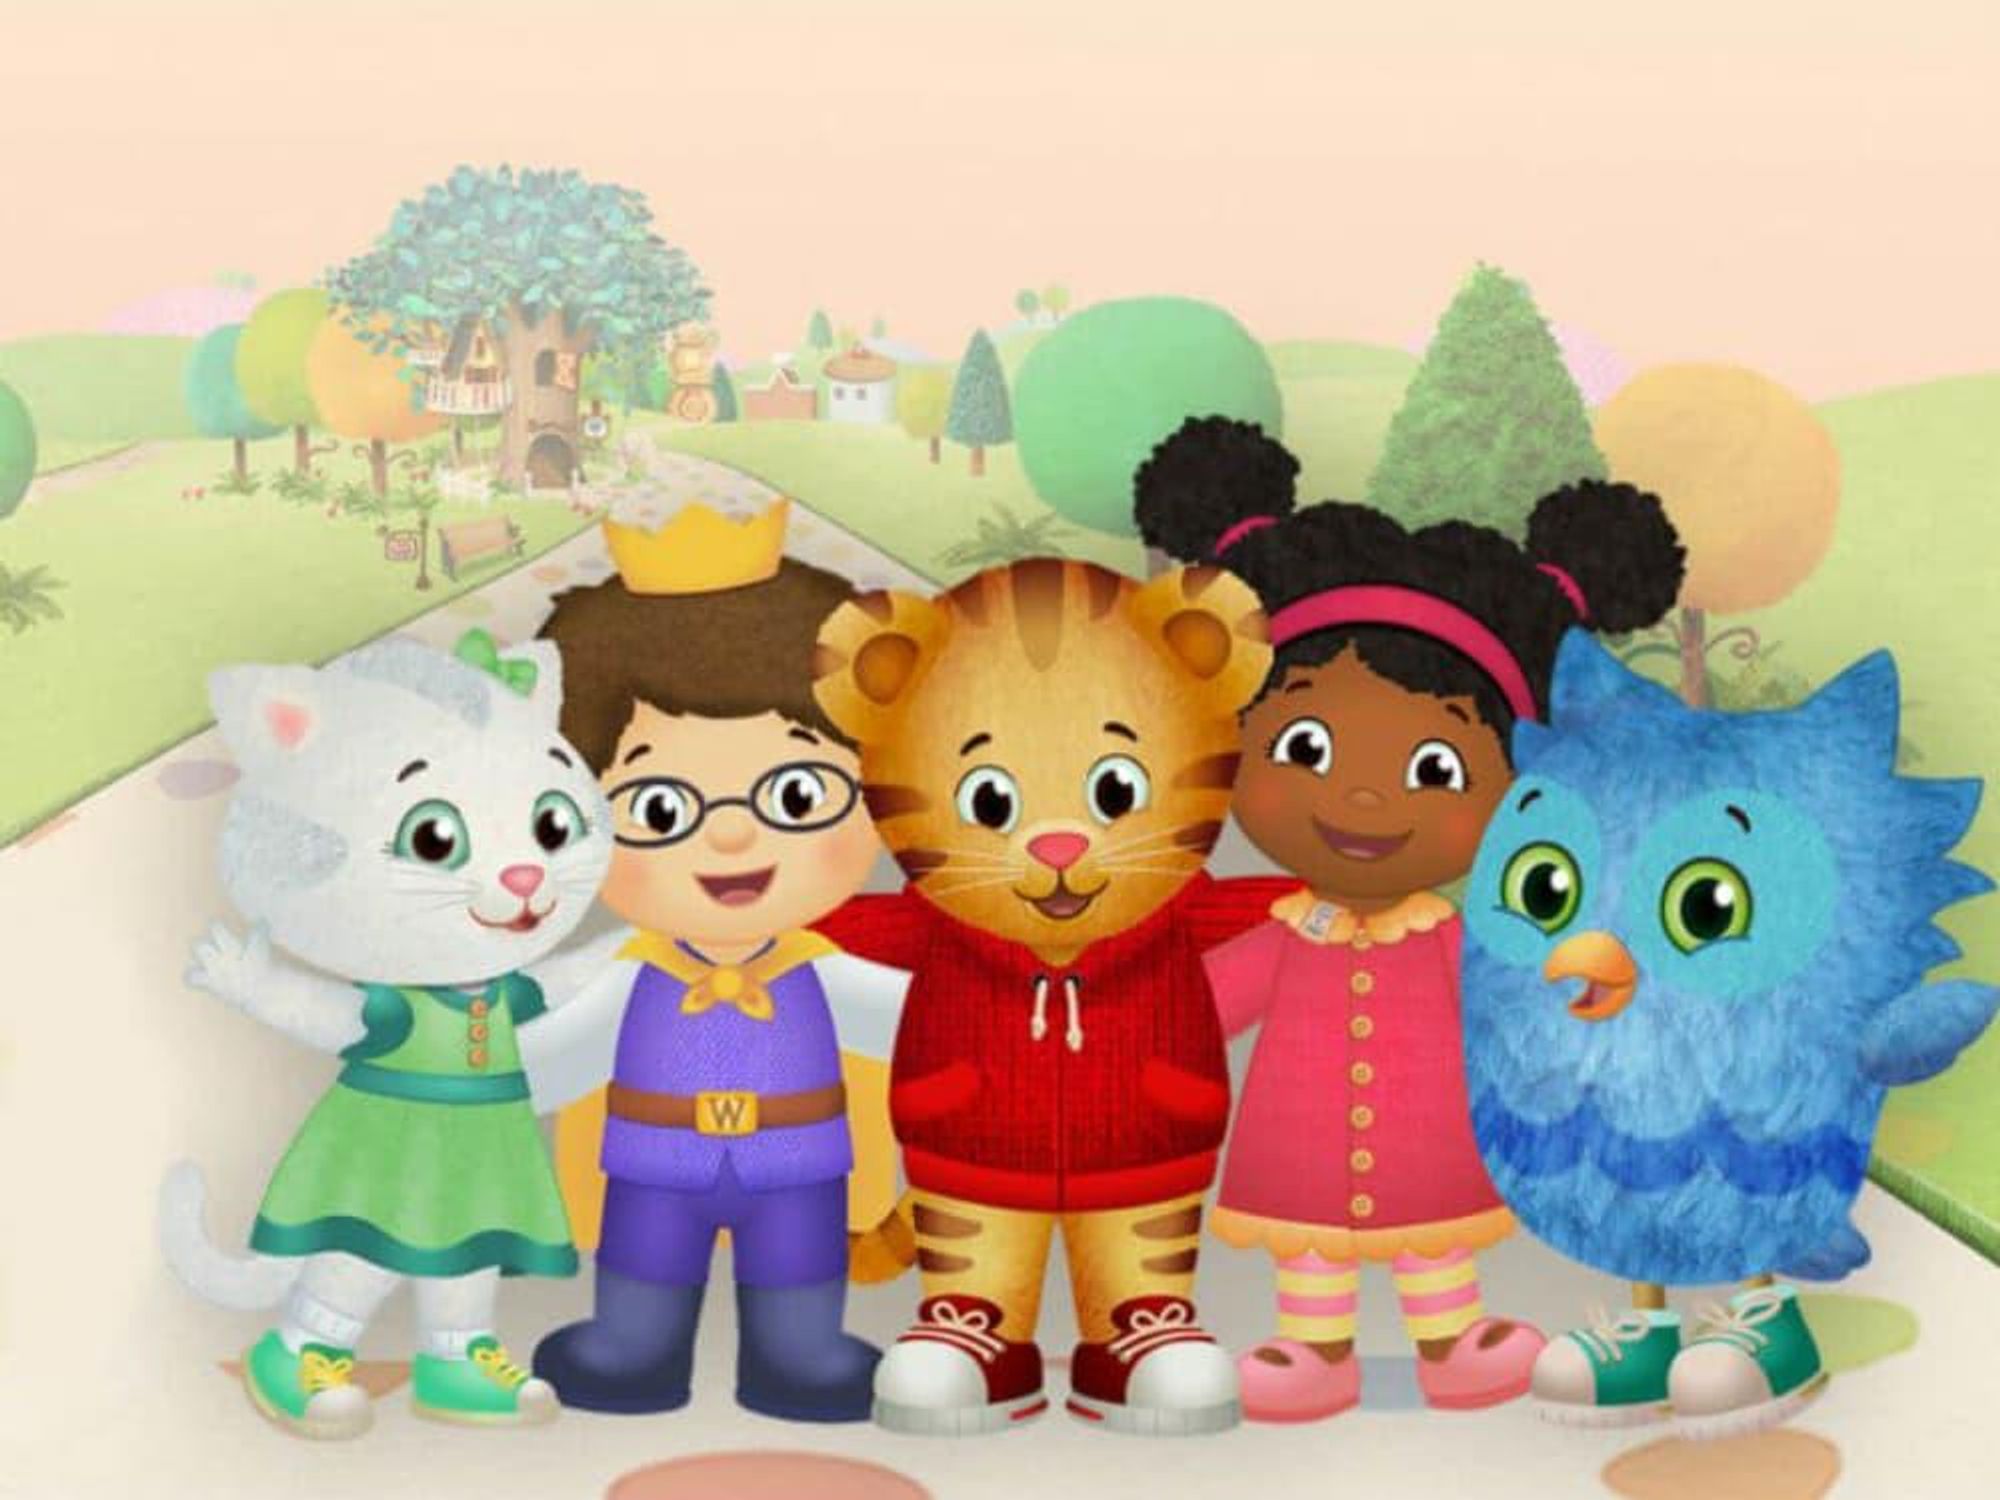 Tobin Kids Series presents Daniel Tiger’s Neighborhood